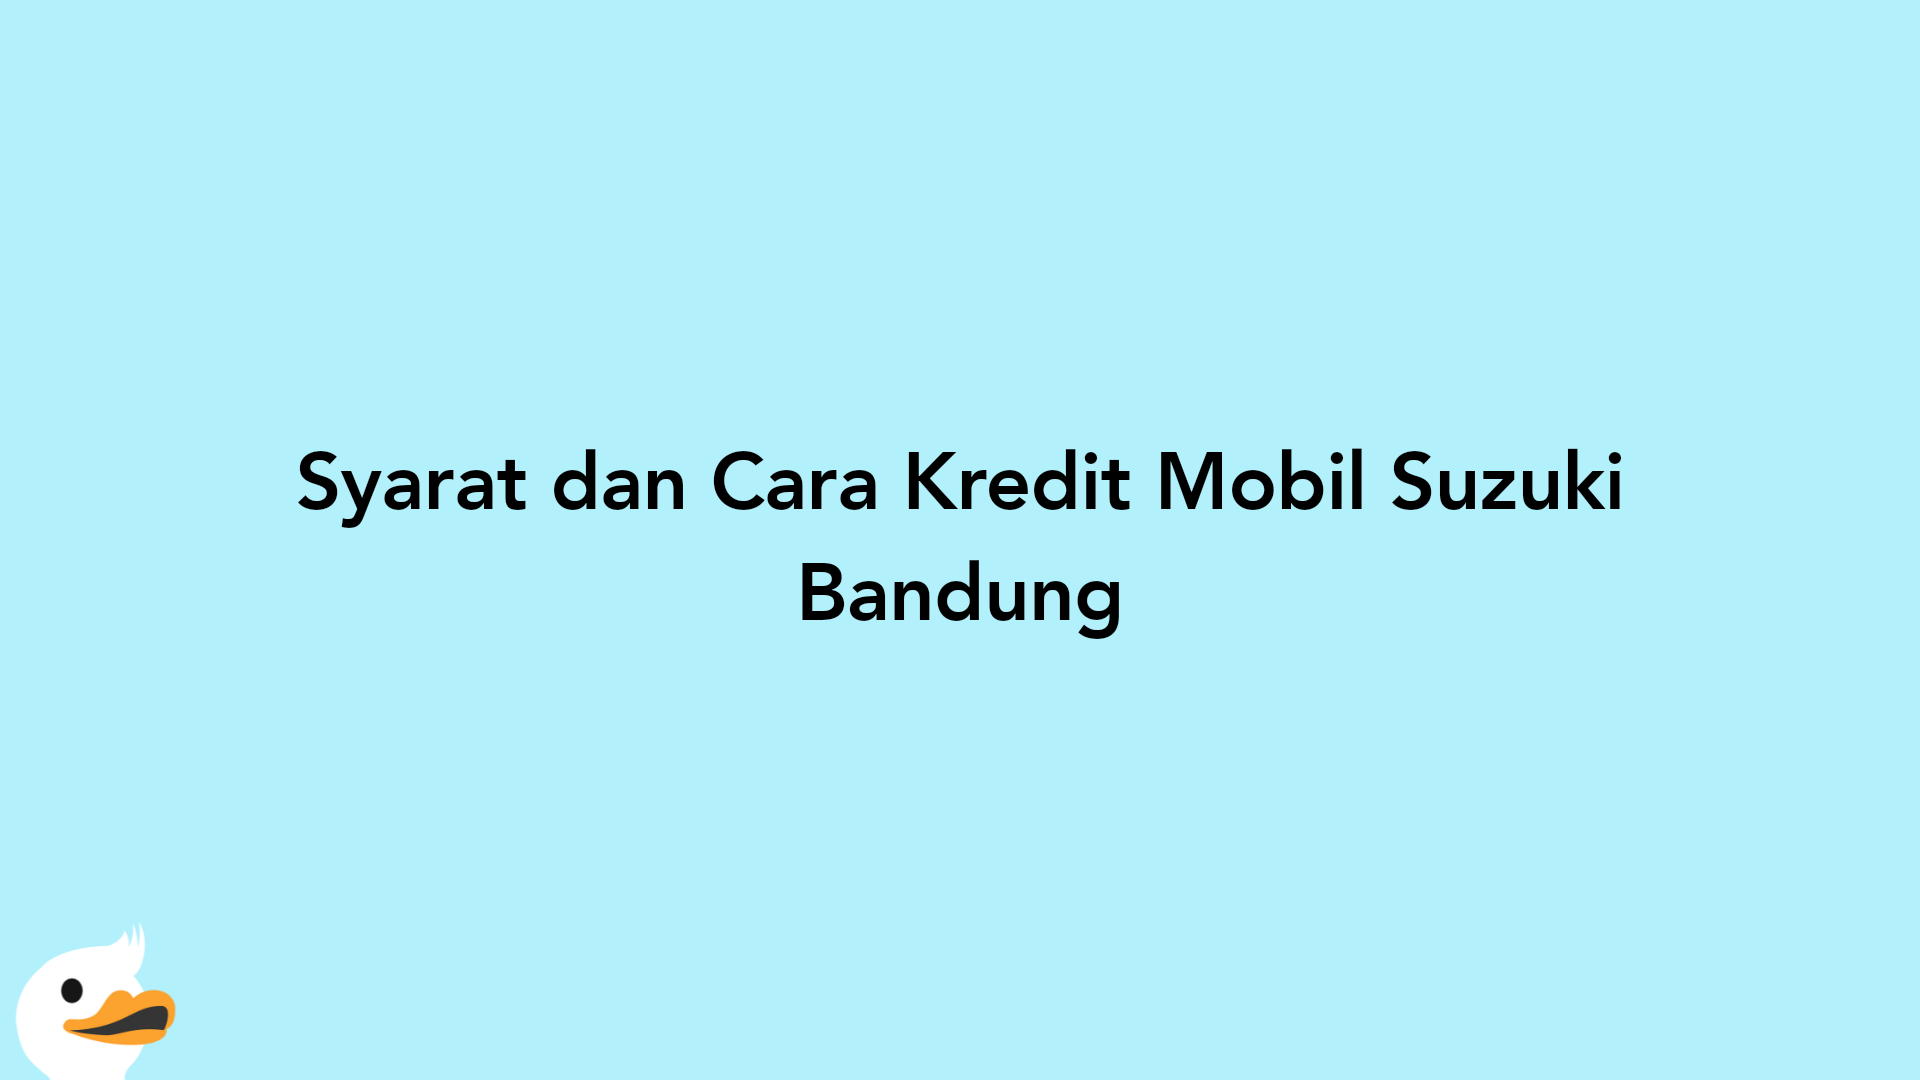 Syarat dan Cara Kredit Mobil Suzuki Bandung